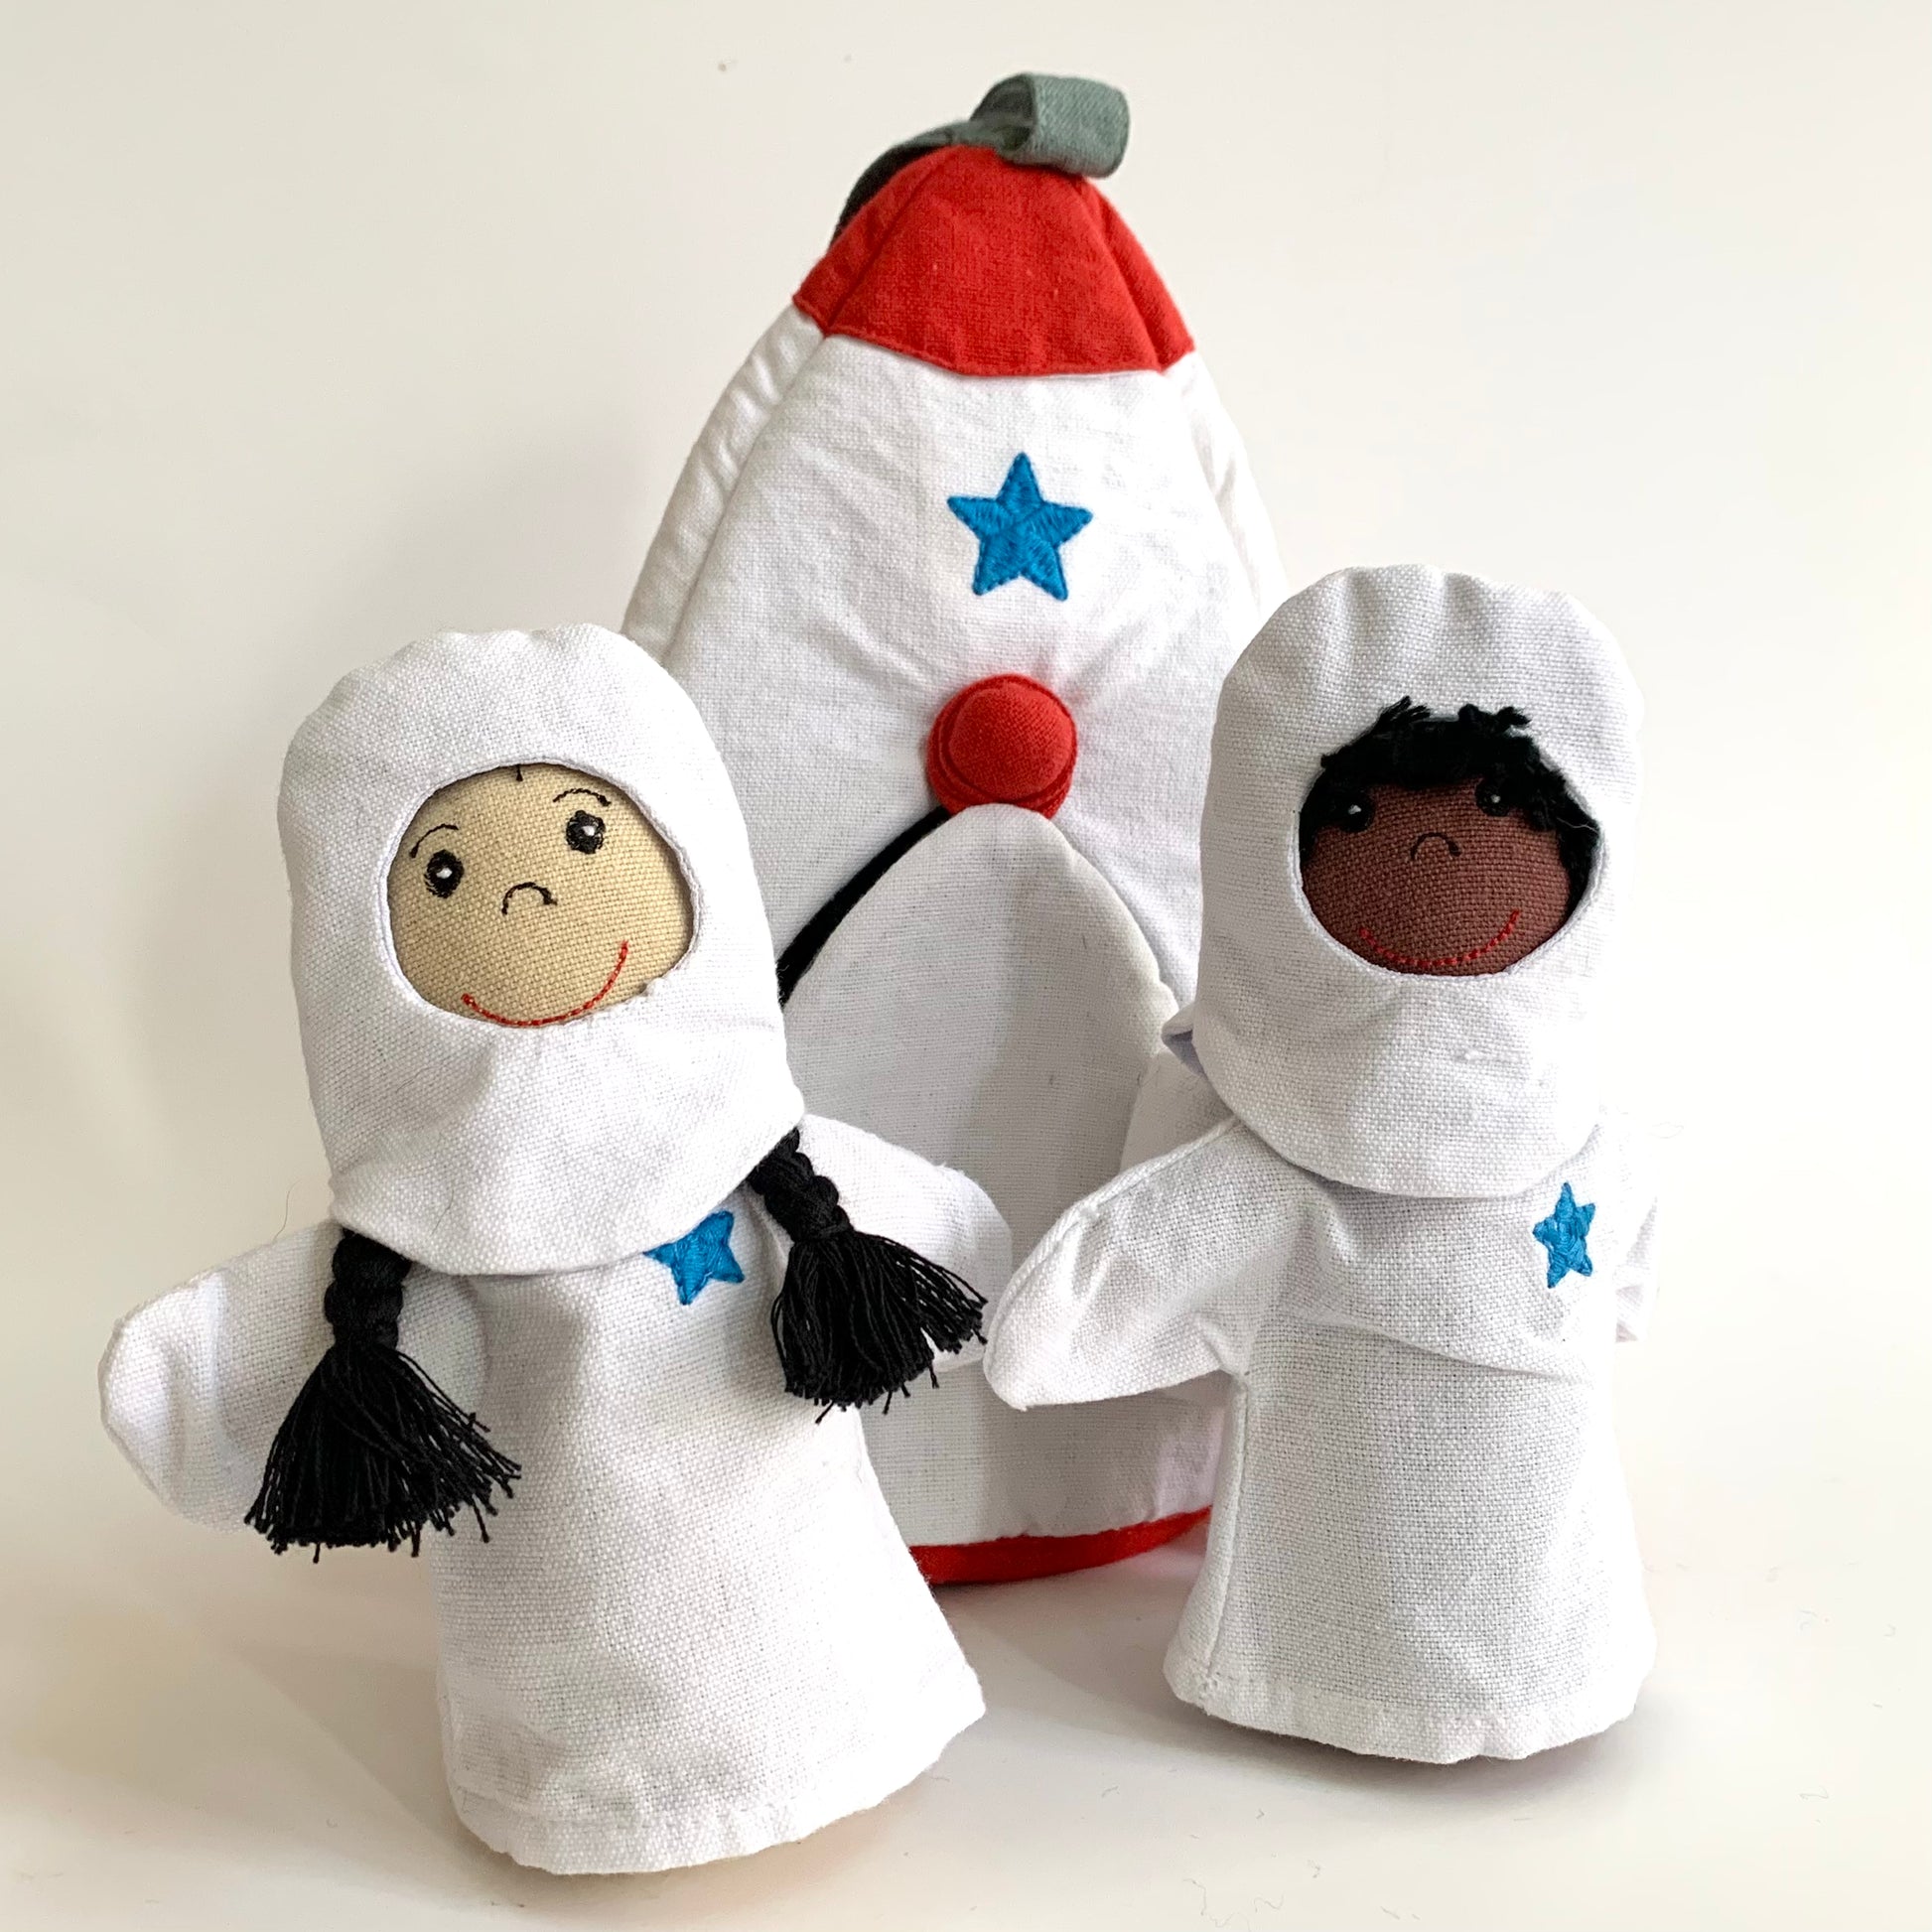 Handmade Astronaut dolls